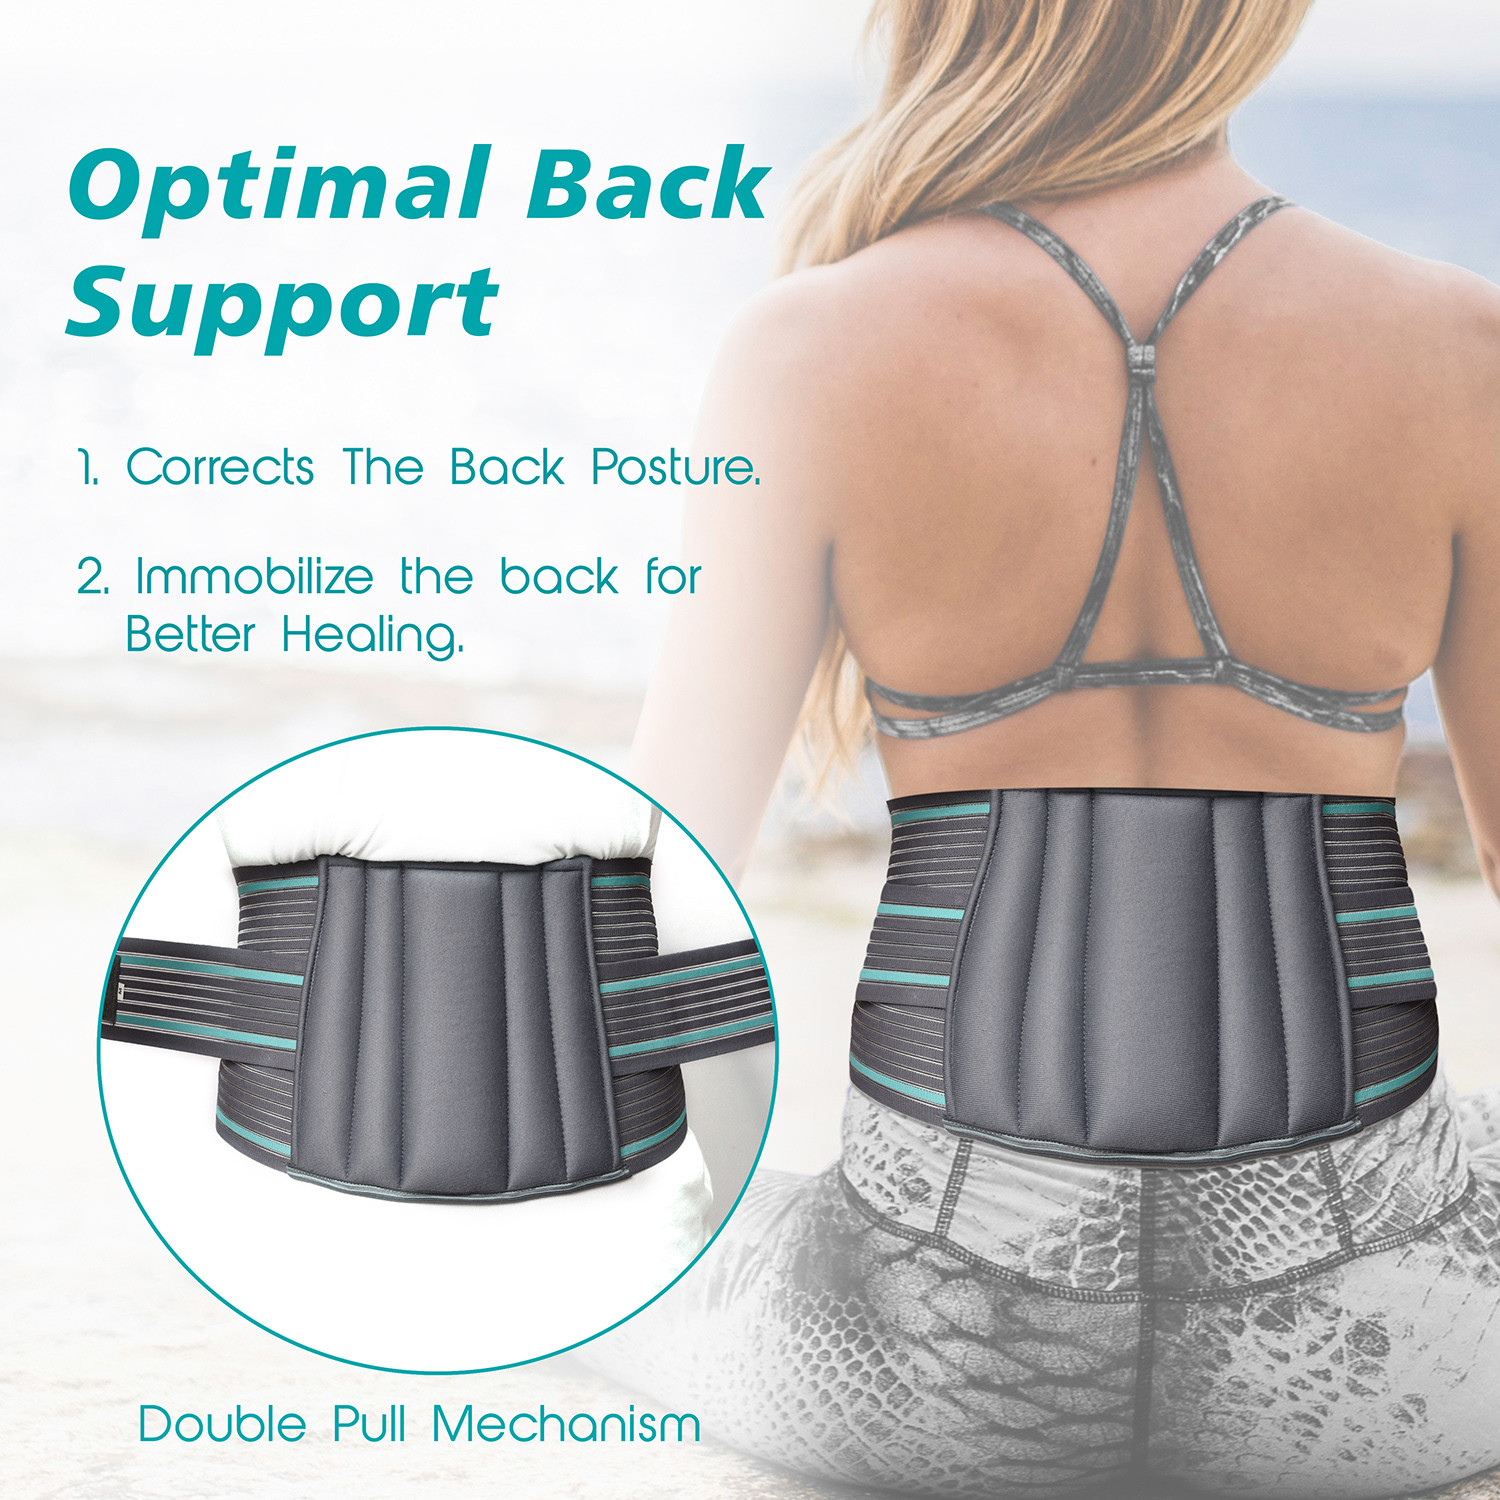 Kuber Industries Lumbar Sacral Belt | Spondylitis Back Pain Belt | Pregnancy Belt | Contoured Belt | Fat Reduction Belt | Lumbo Sacral Belt | Size-XXXL | Gray